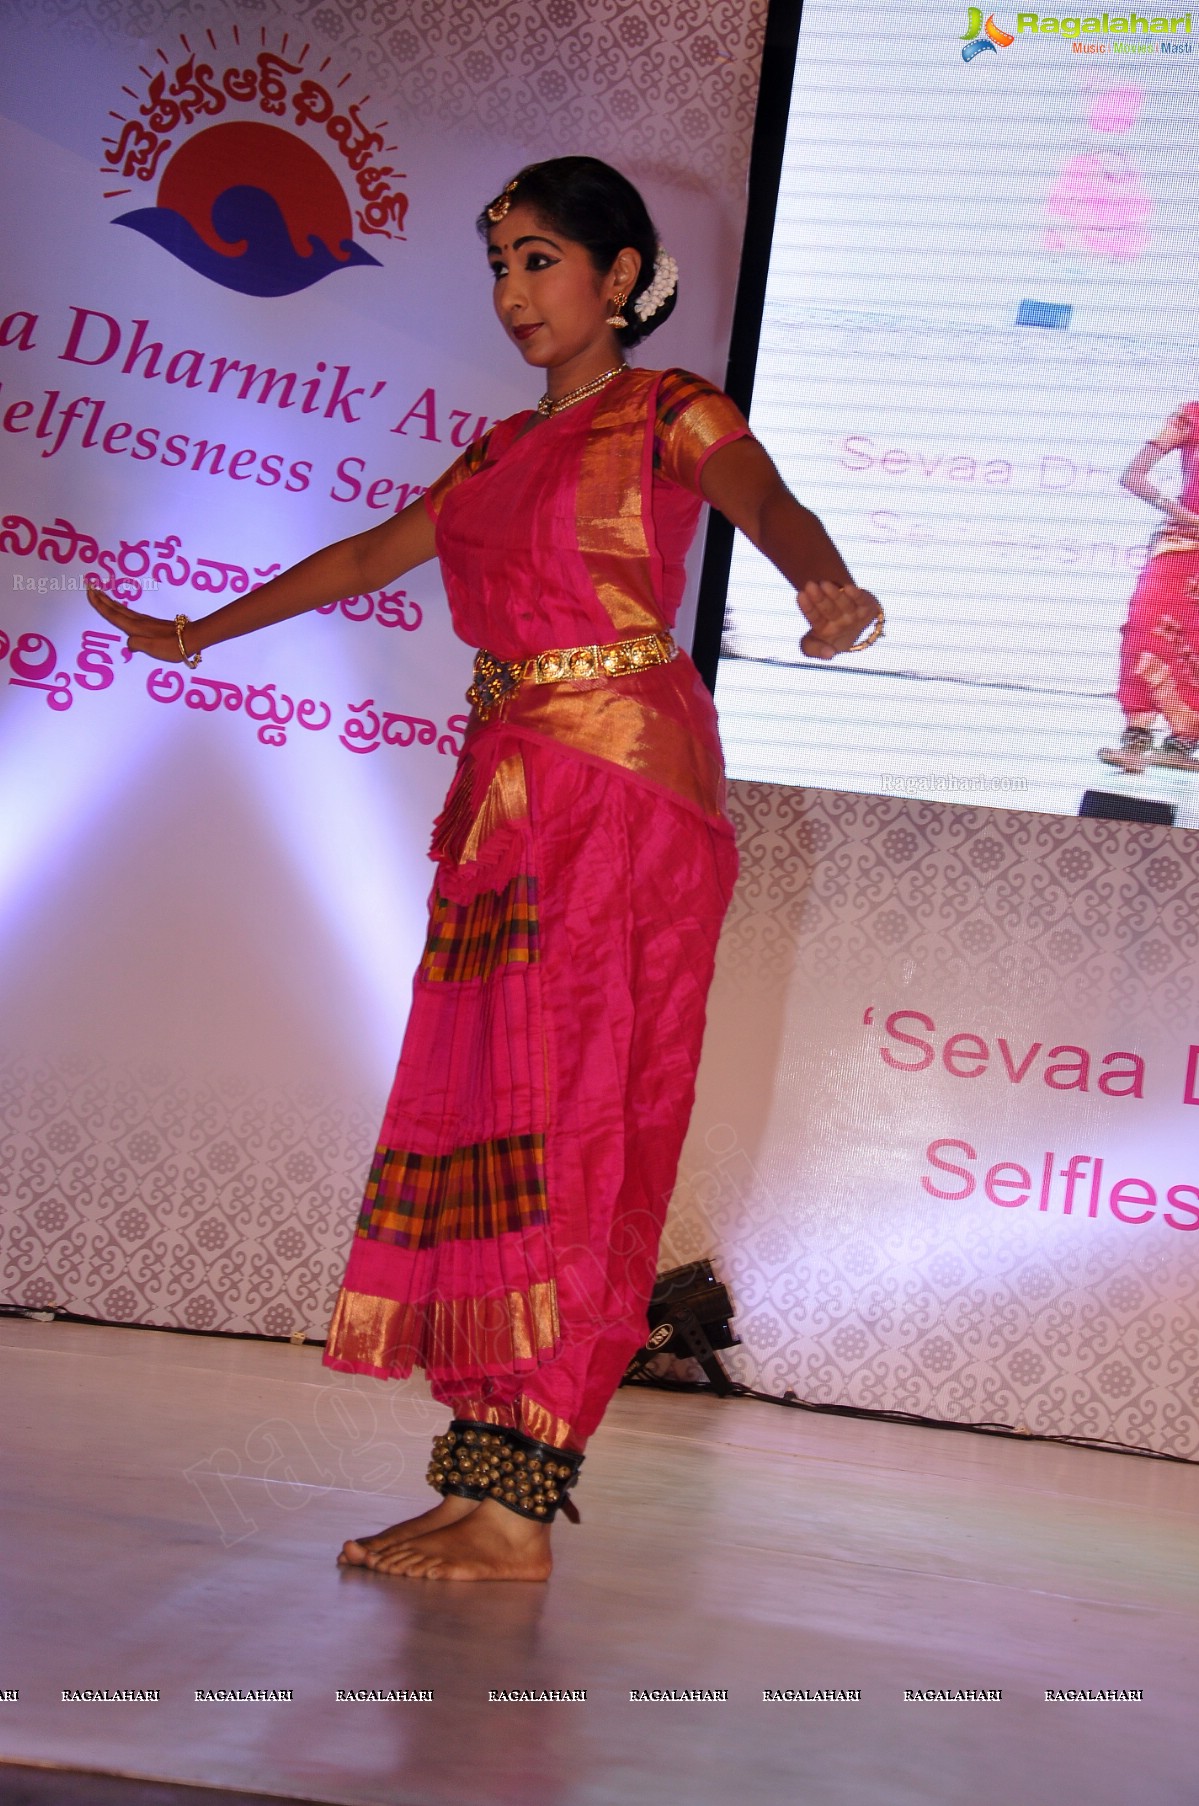 Sevaa Dharmik Awards to Selflessness Service by Chaitanya Art Theatres, Hyderabad